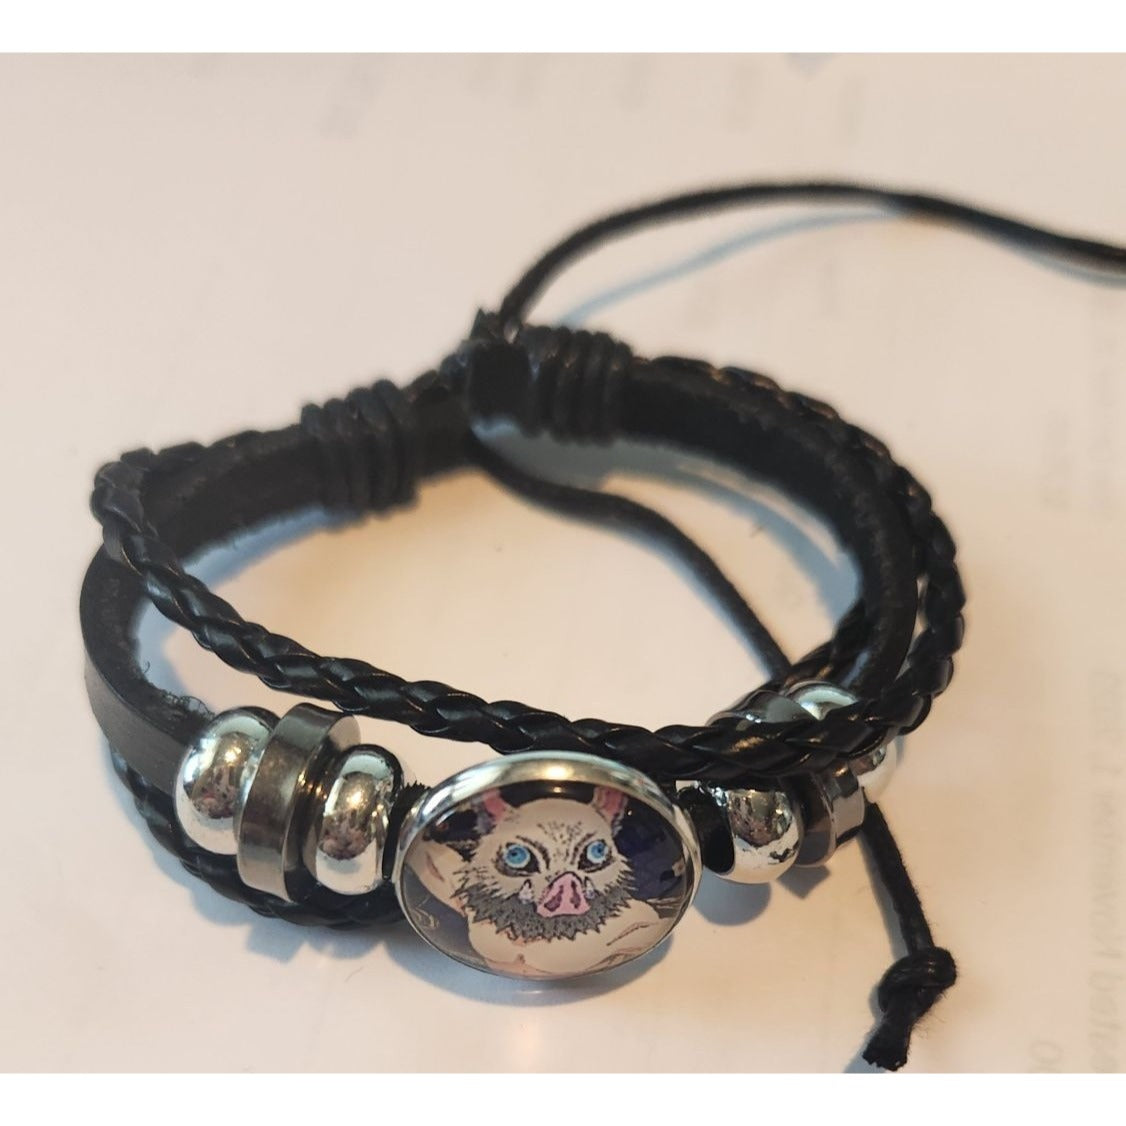 6 pcs Slayer Leather Braided Bracelet Anime Wristband Cosplay Jewelry Glass Gemstone Gifts Slider Adjustable